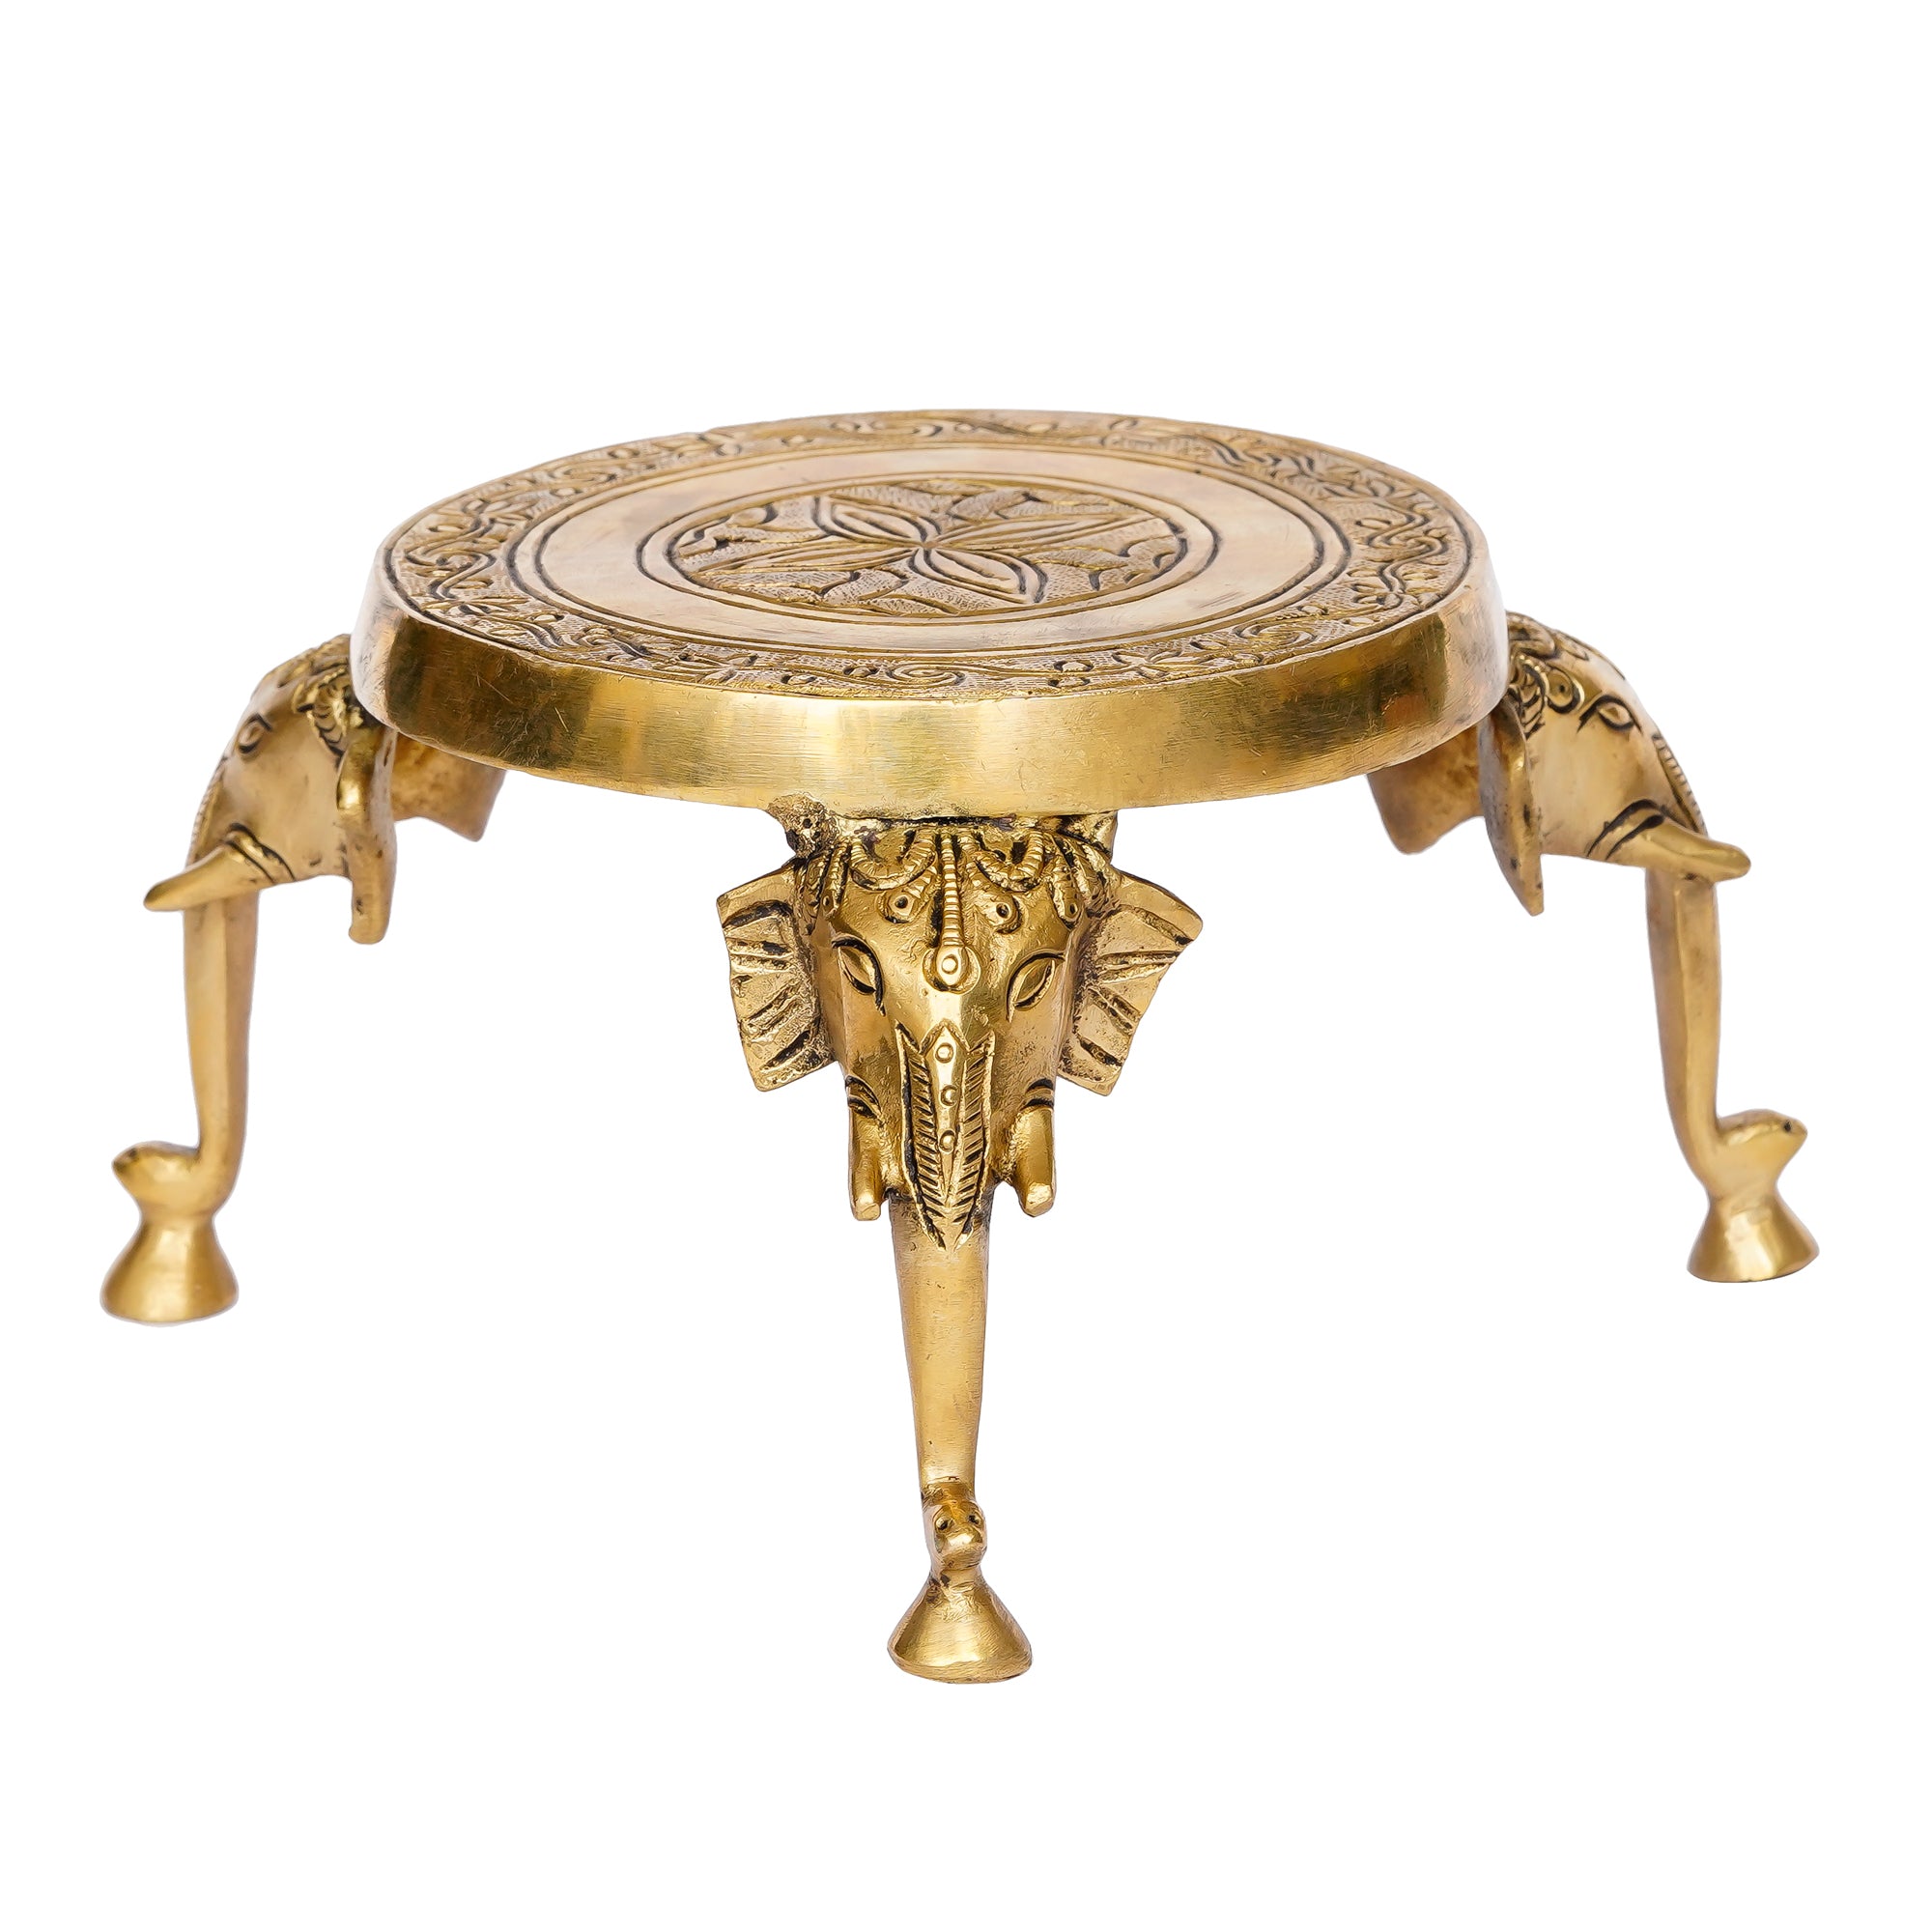 Decorative Brass Stool With Elephant Design Legs 2